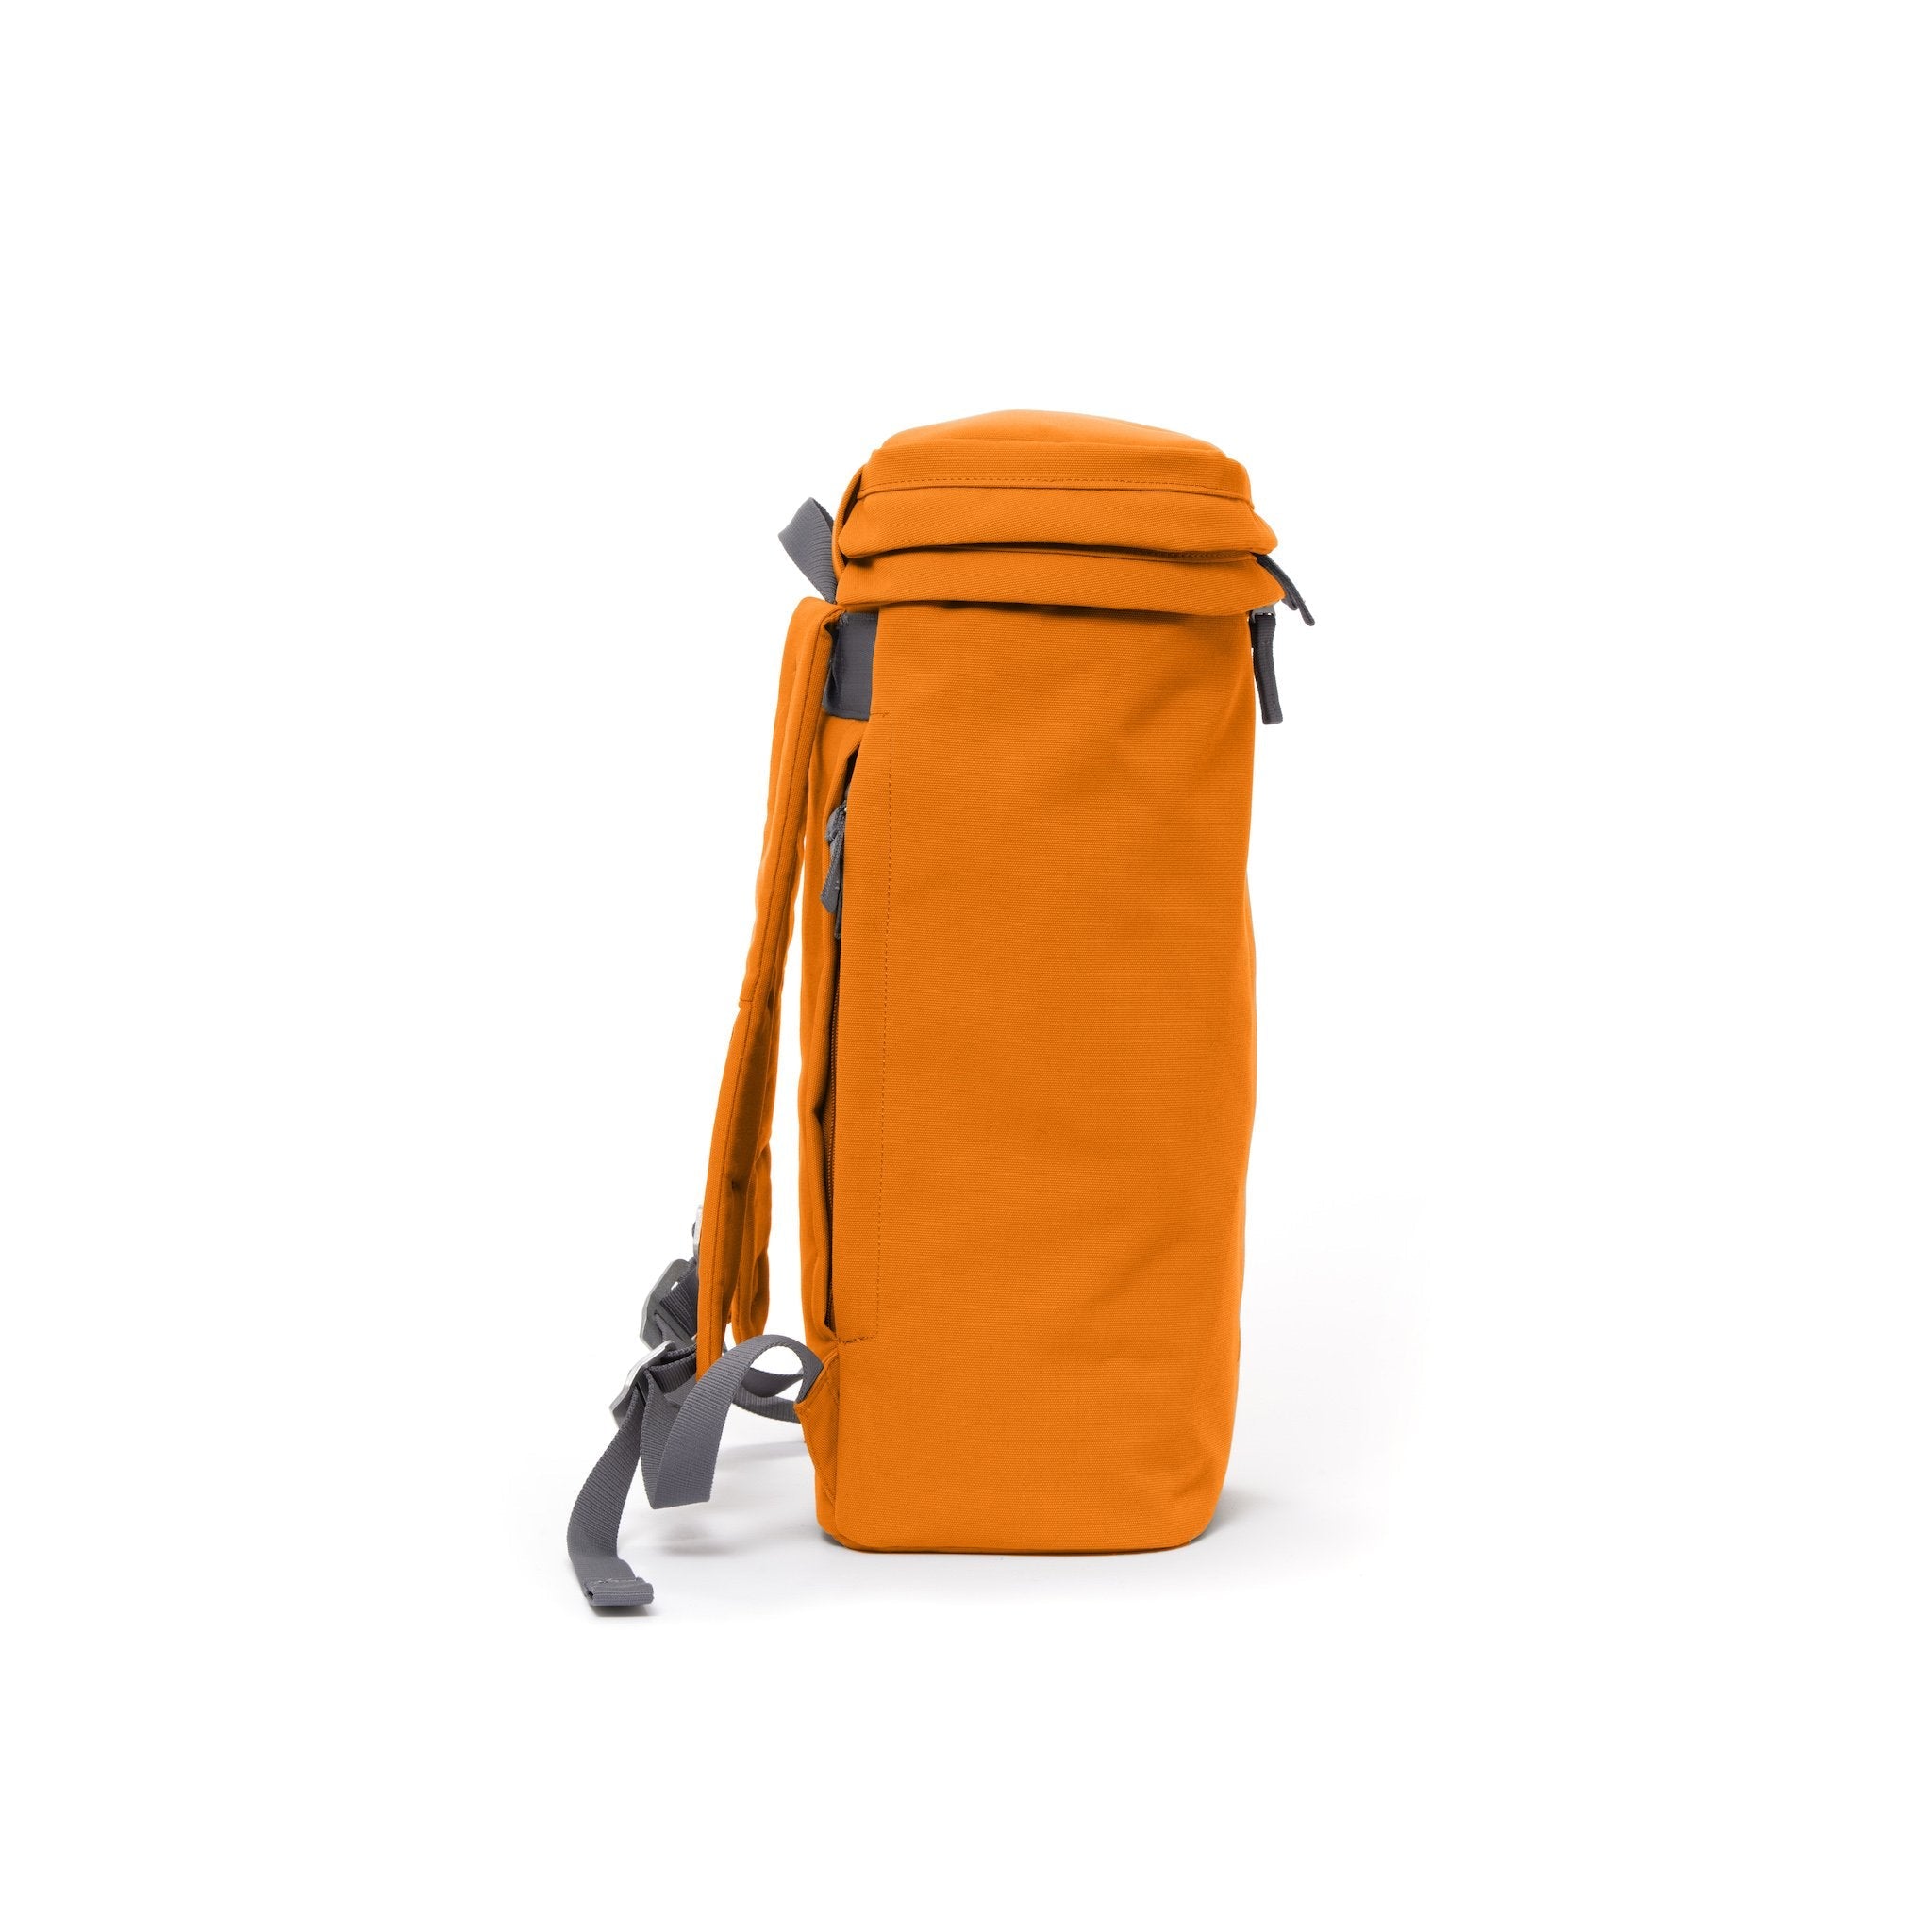 Orange canvas backpack with top zip pocket.